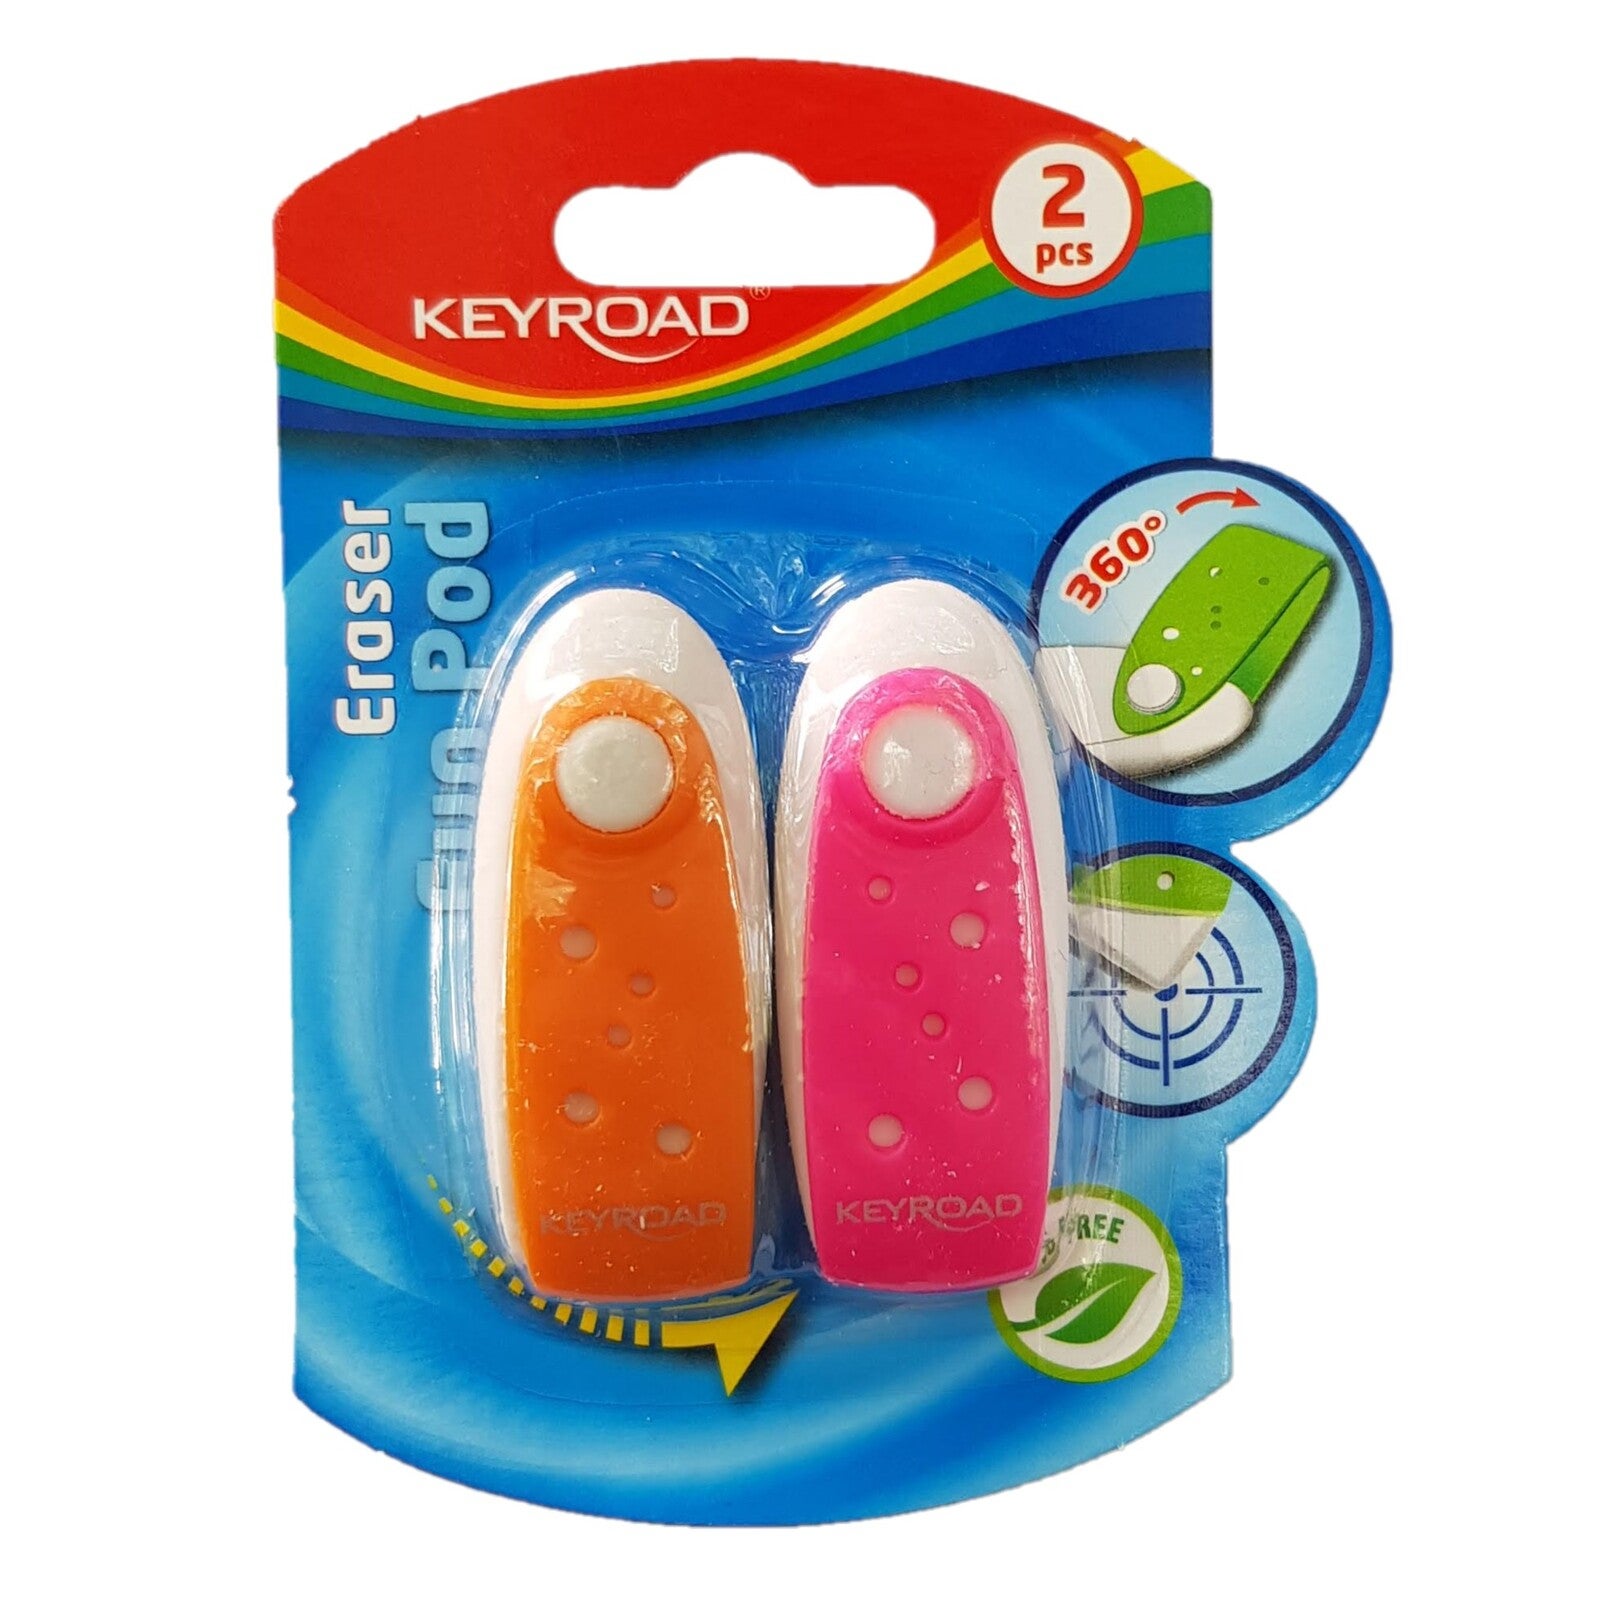 2pce Keyroad Eraser Fun Pod 360 Rotate Rubber Drawing School Essential